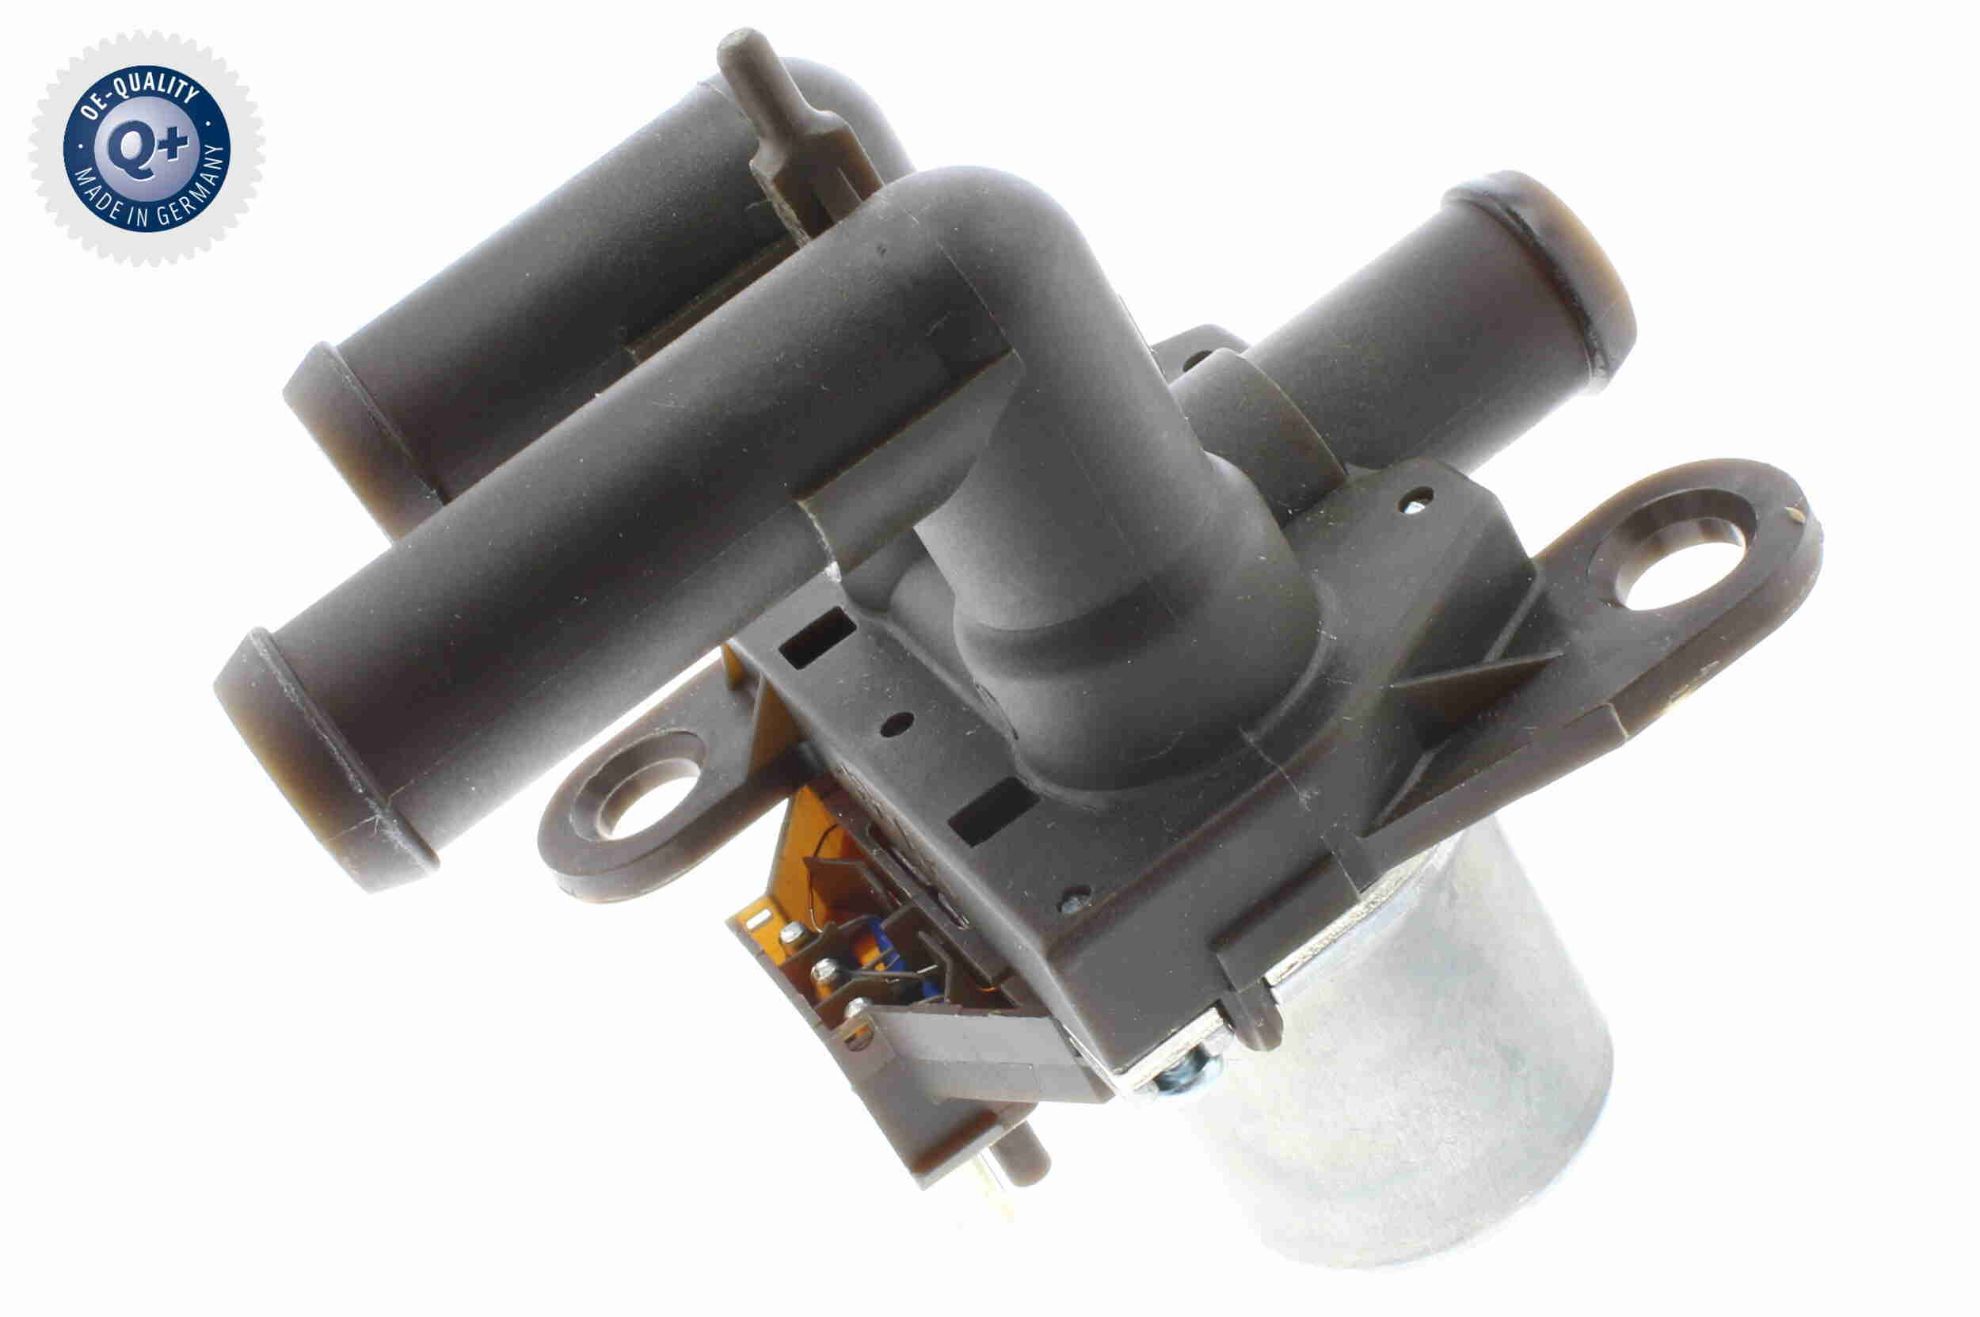 Obrázok Regulačný ventil chladenia VEMO Q+, original equipment manufacturer quality MADE IN GERMANY V30770002